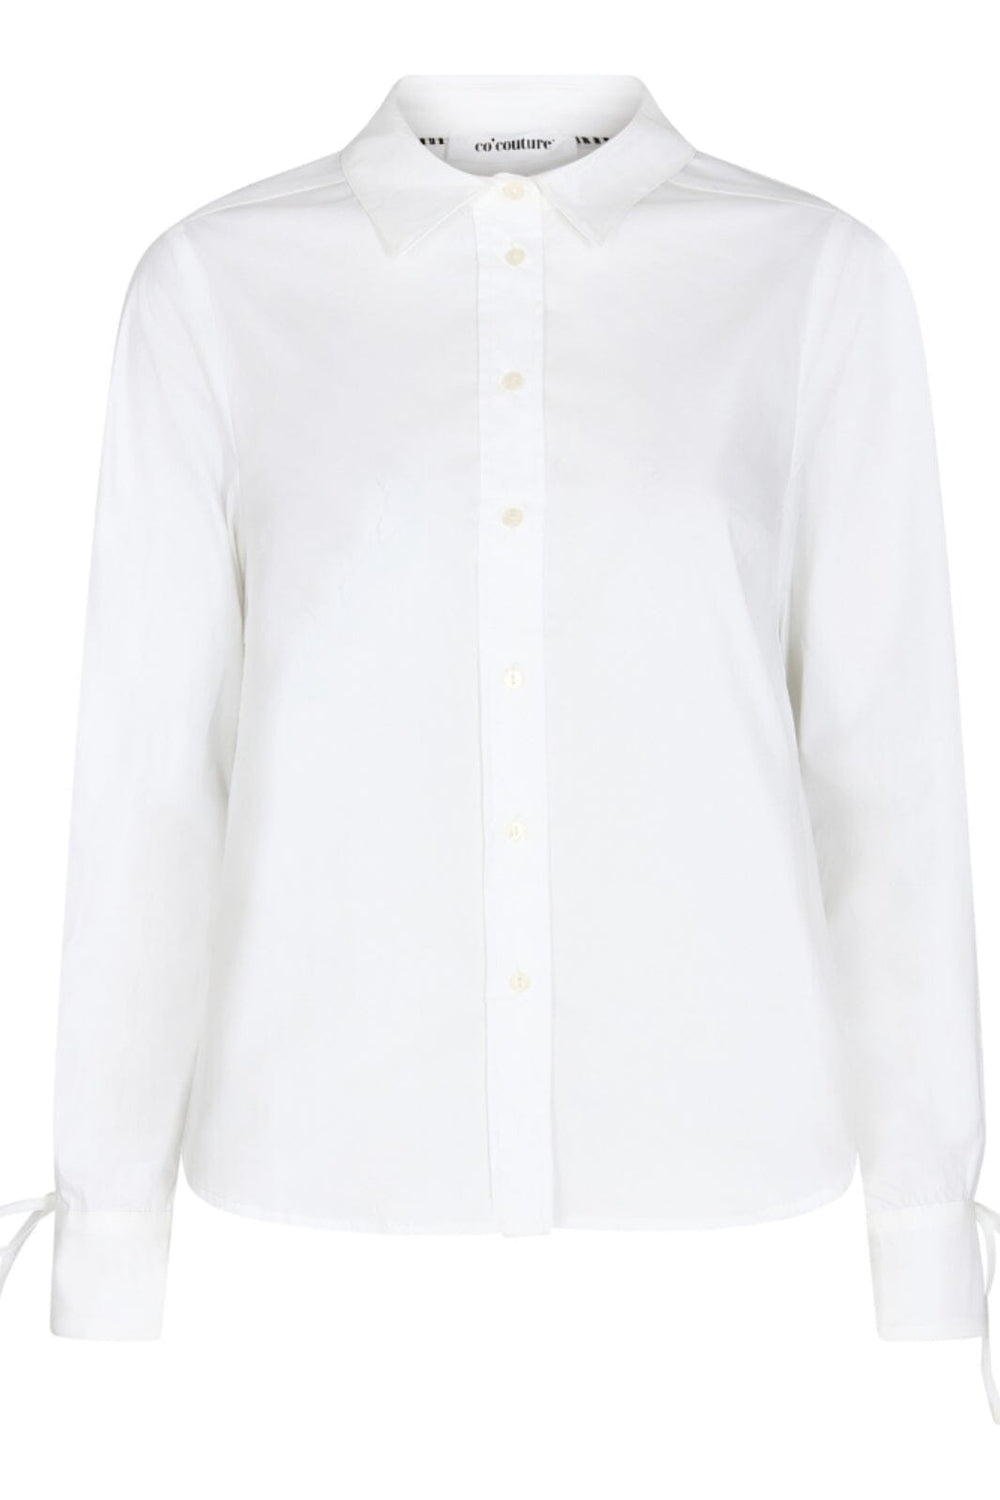 Co´couture - Sandycc Frill Sleeve Shirt - 4000 White Skjorter 